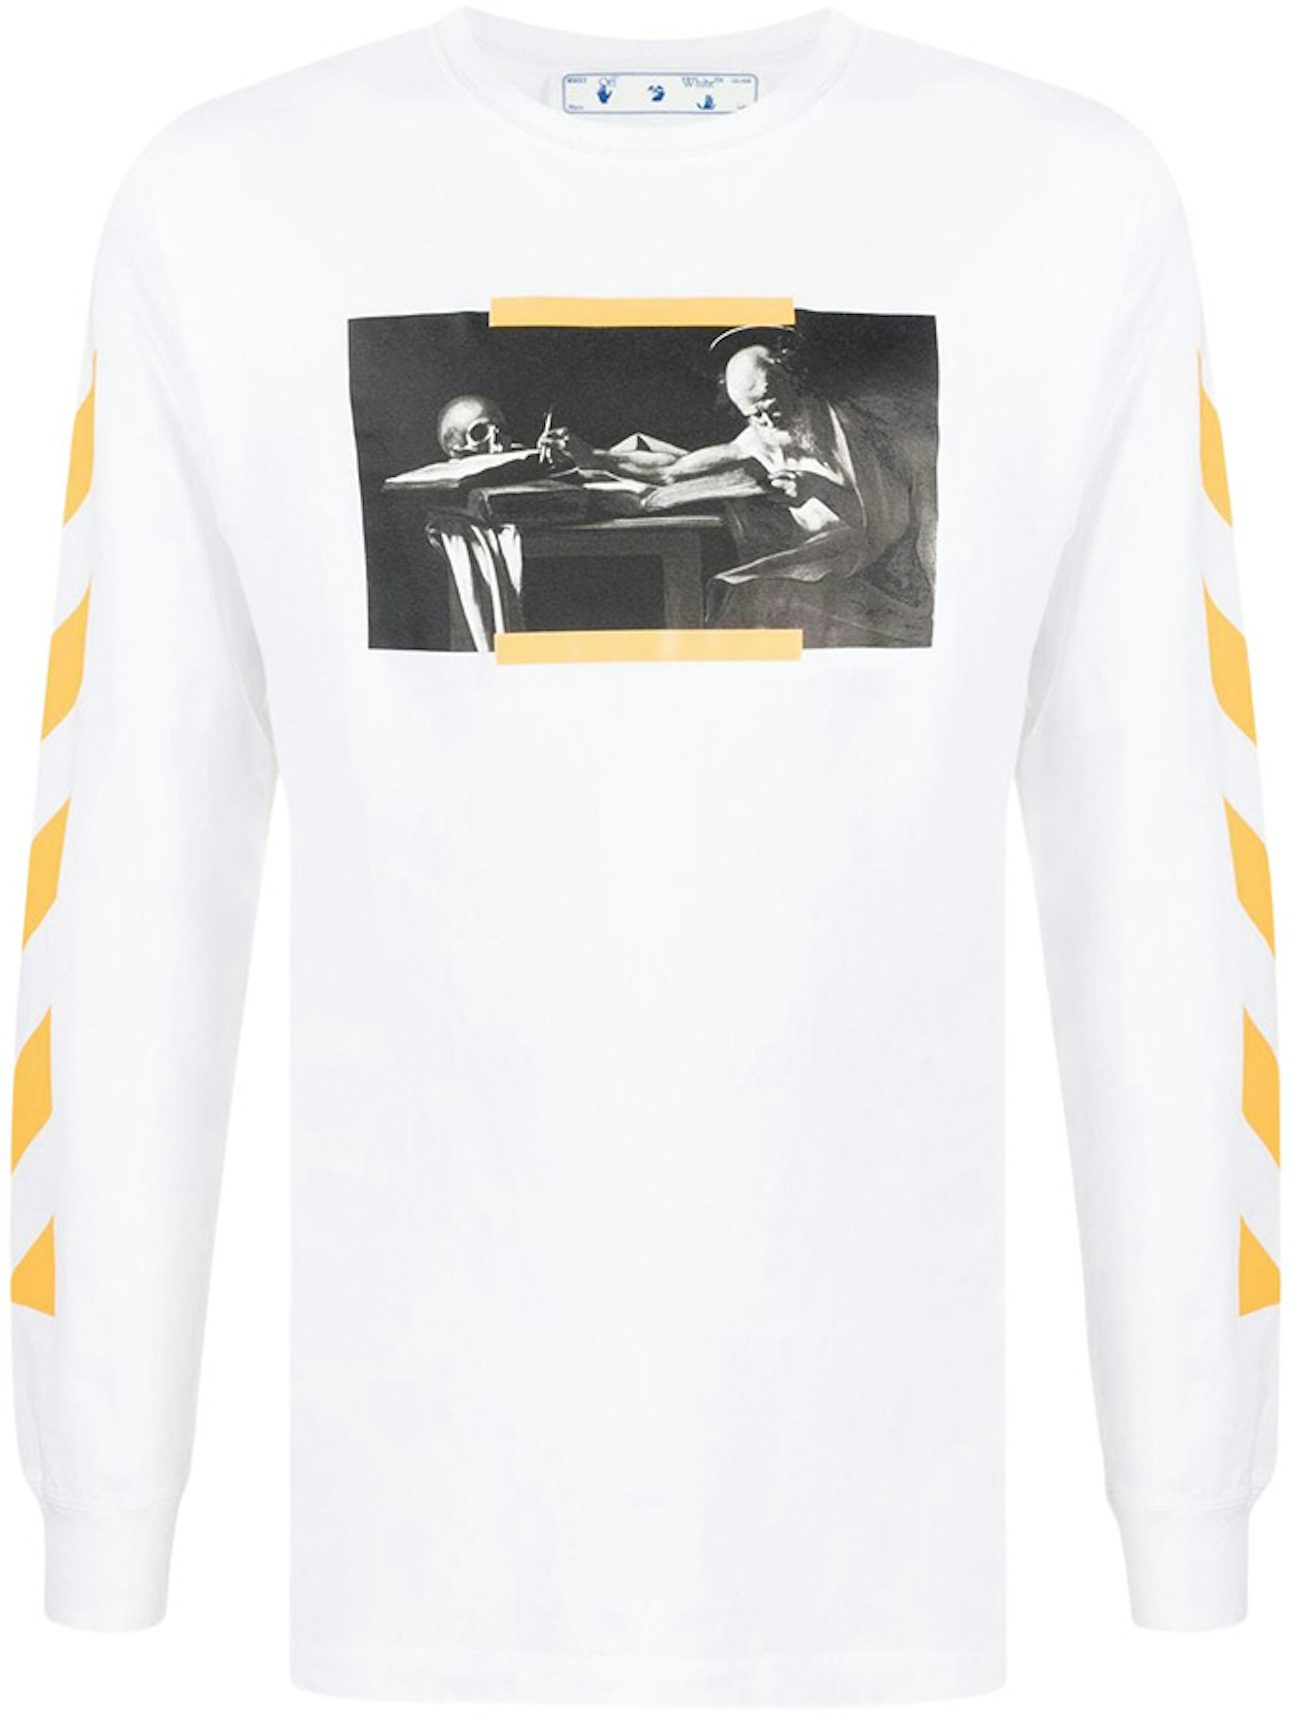 Off-White c/o Virgil Abloh X Champion Yellow T-shirt for Men